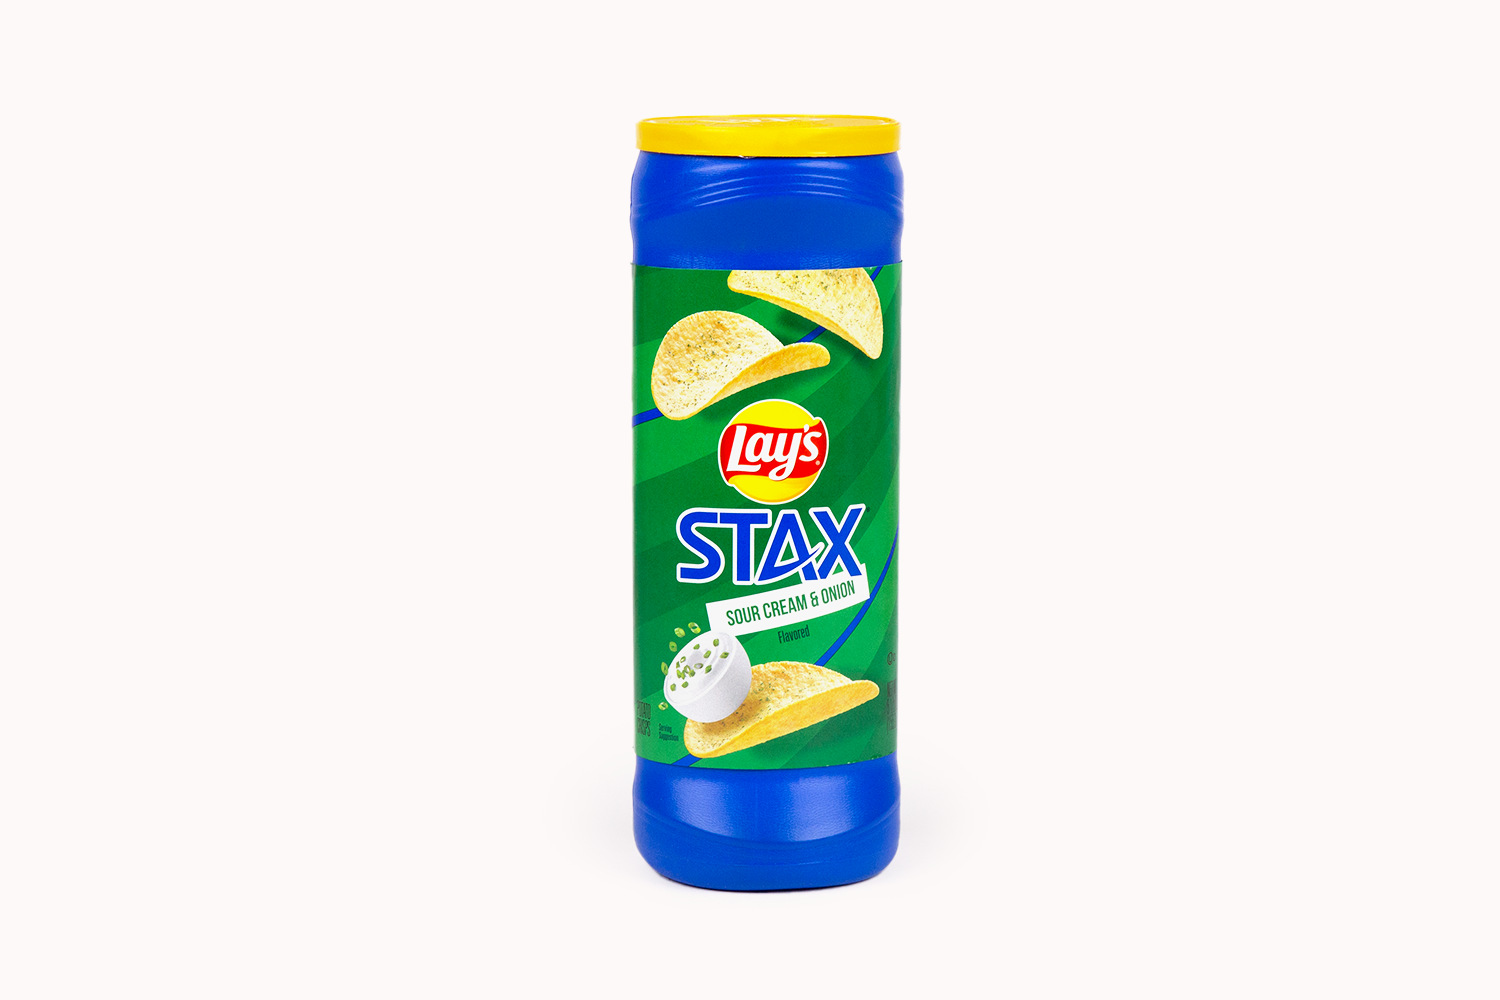 Lay's STAX Sour Cream & Onion